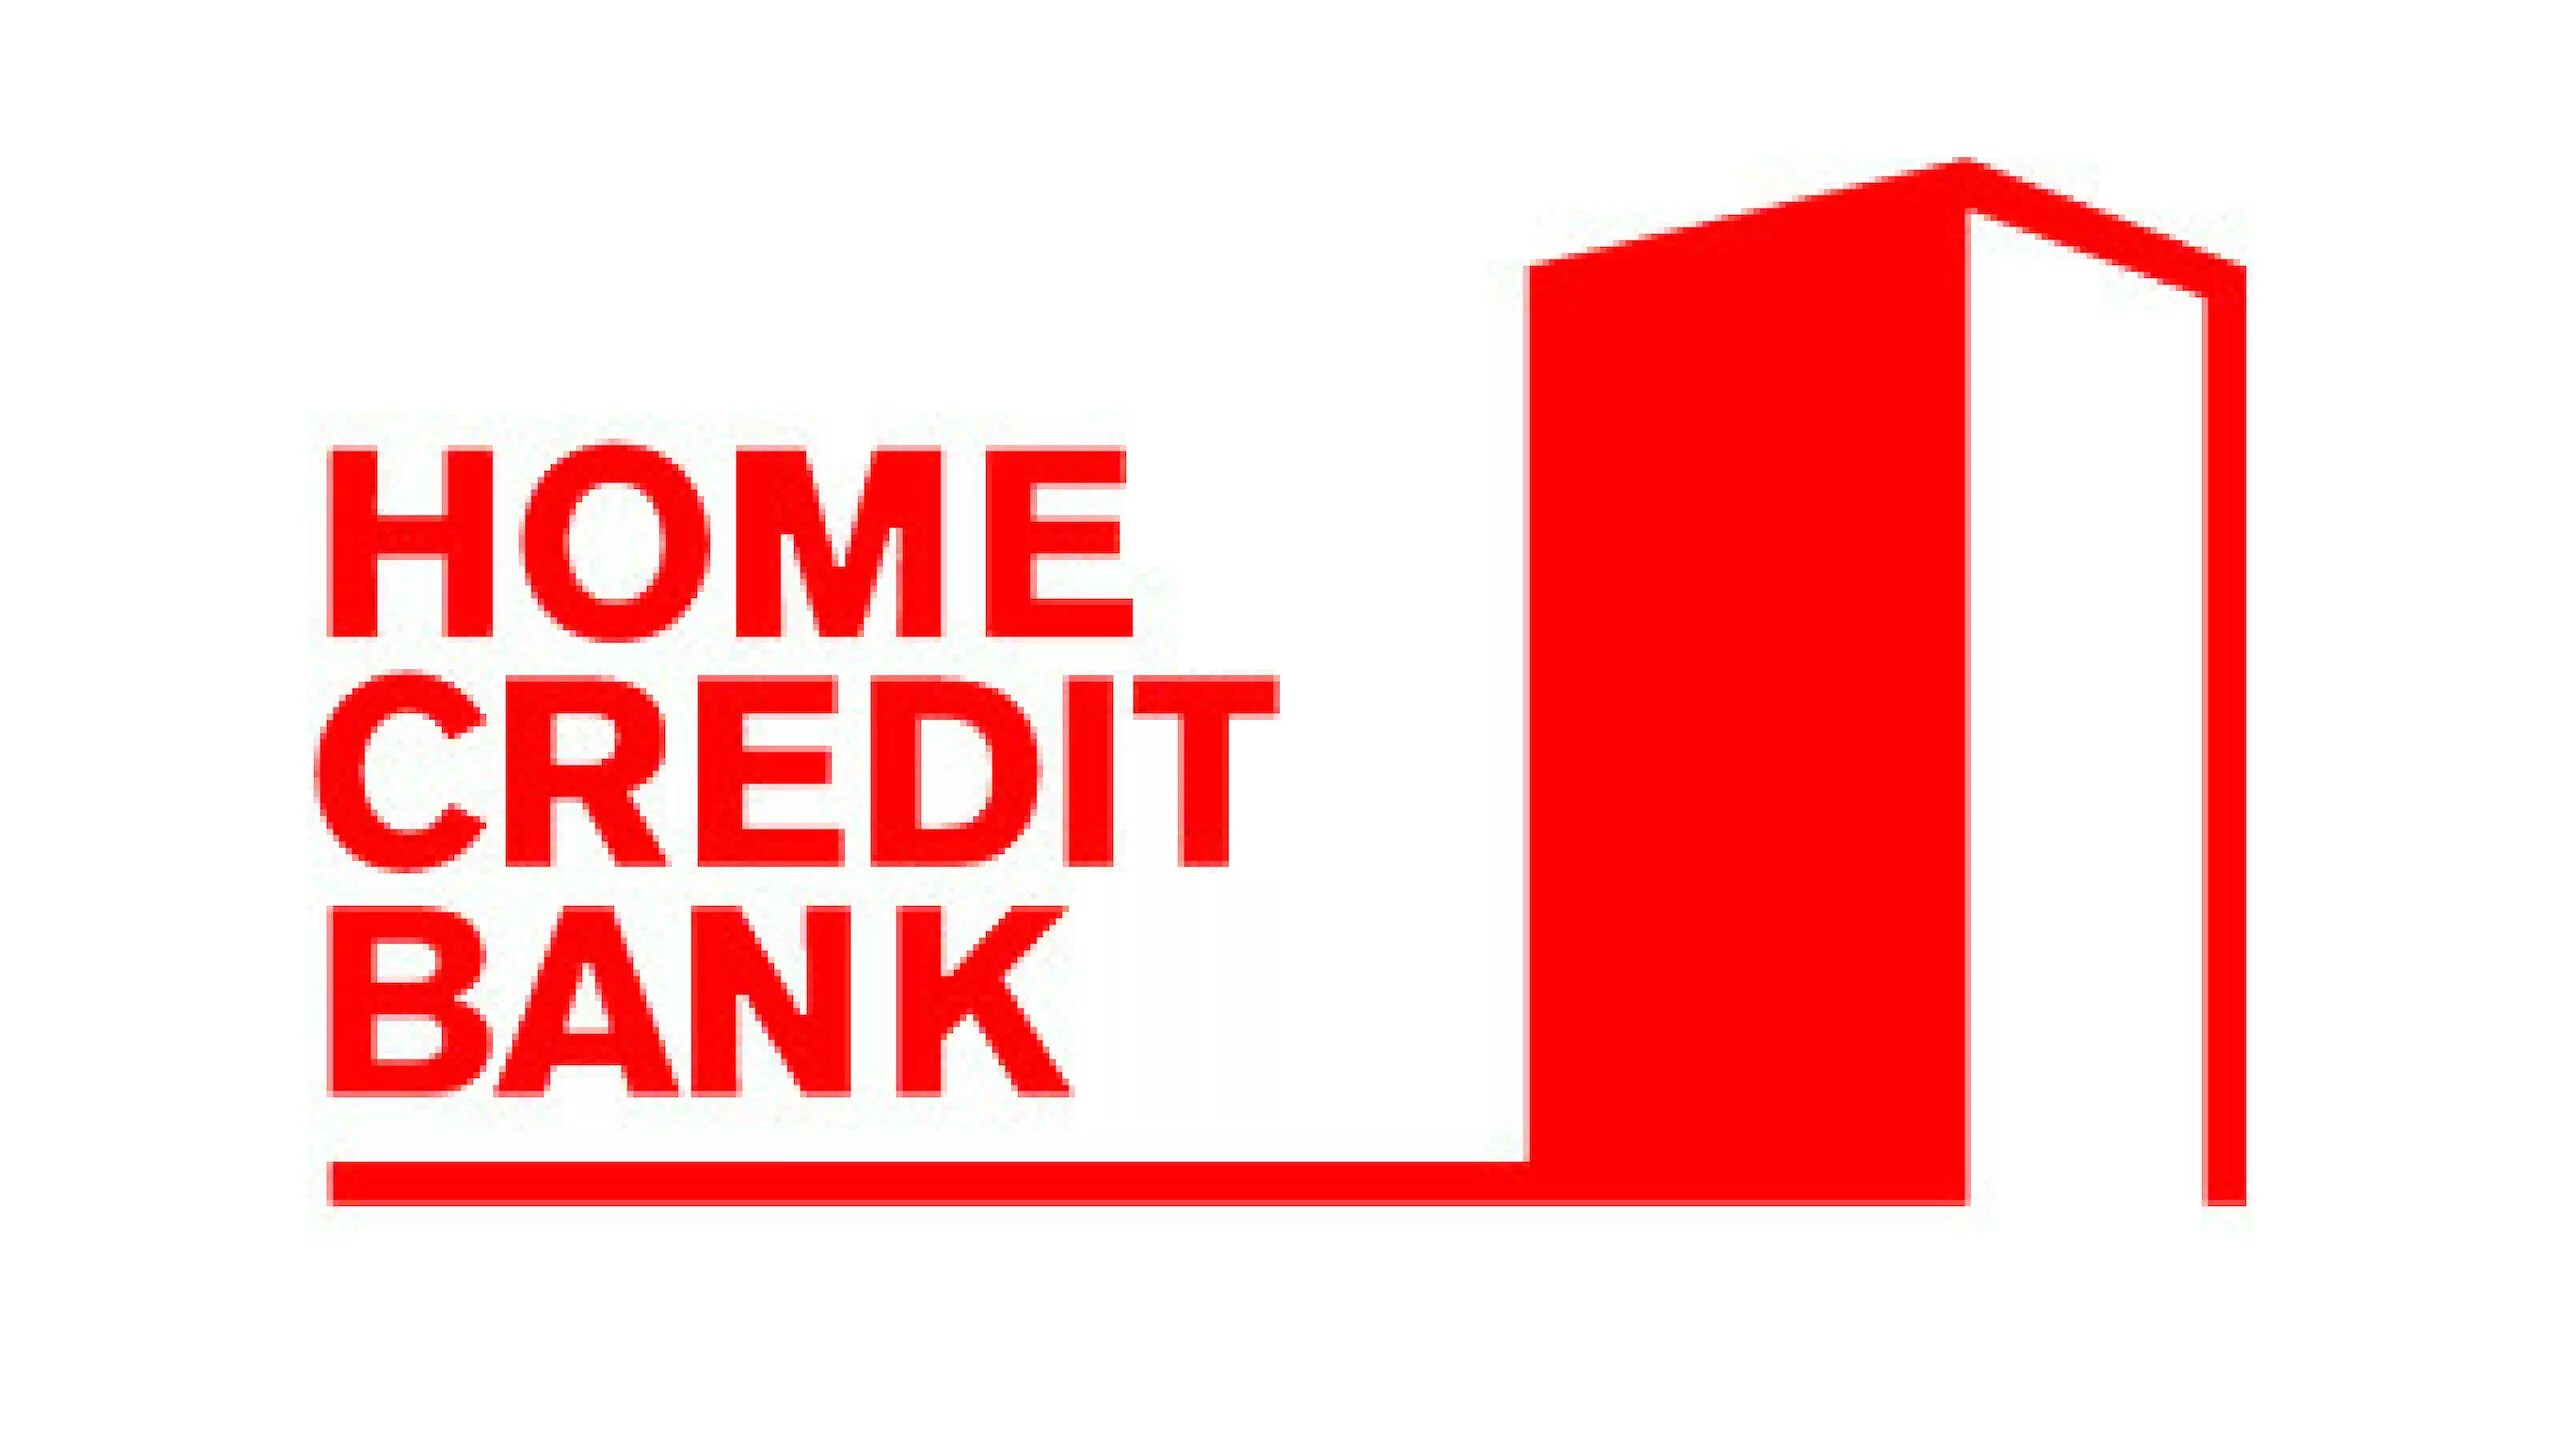 Банк Home credit. Хоум кредит логотип. Логотип Home credit банка. Home credit Bank логотип без фона.